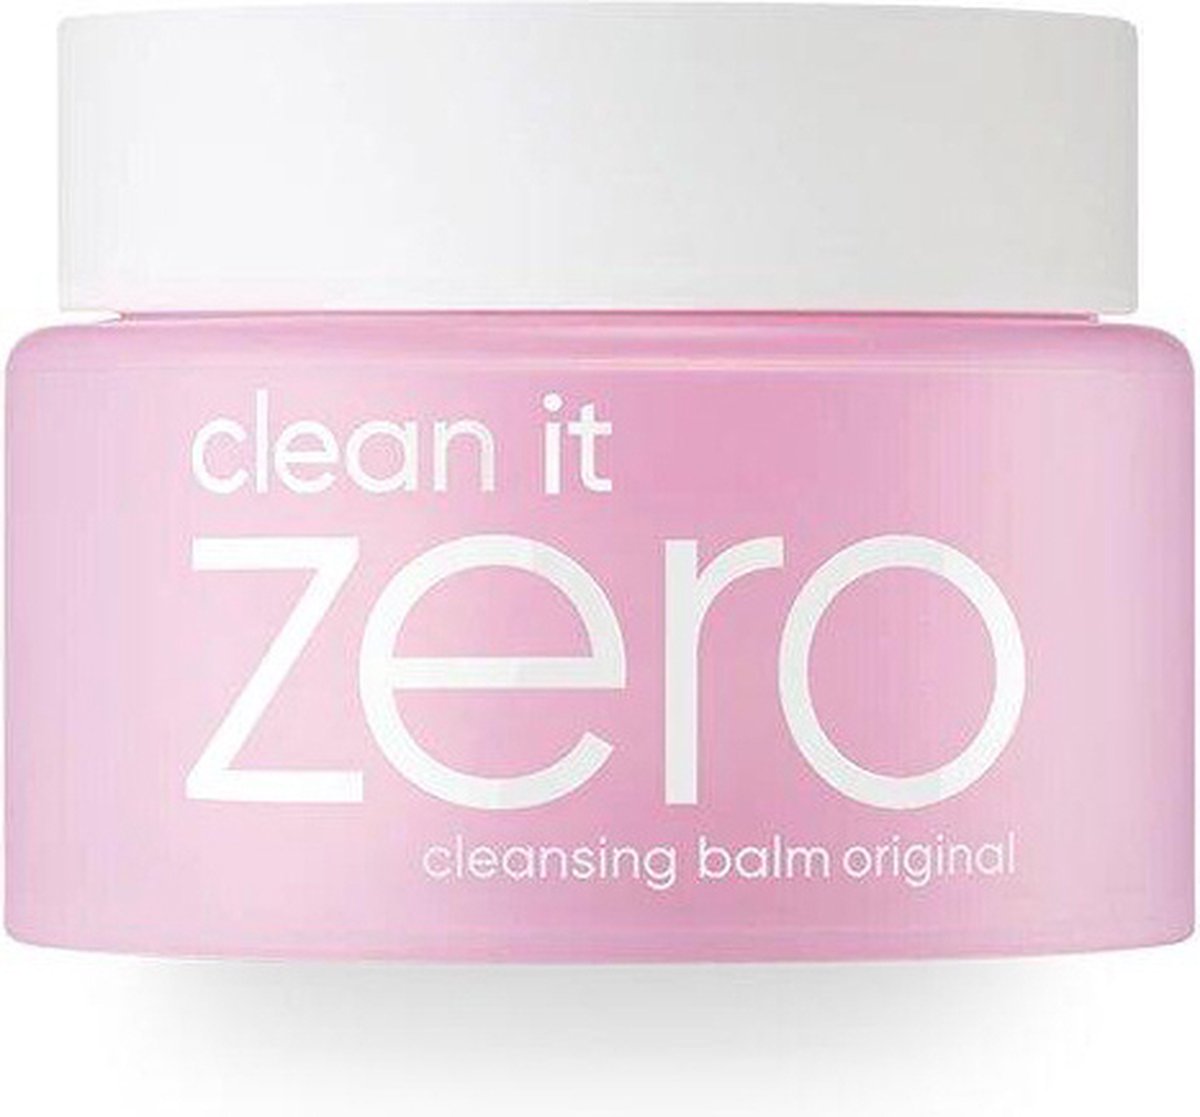 Banila Co - Clean It Zero Cleansing Balm Original - 25 mL - 25 mL